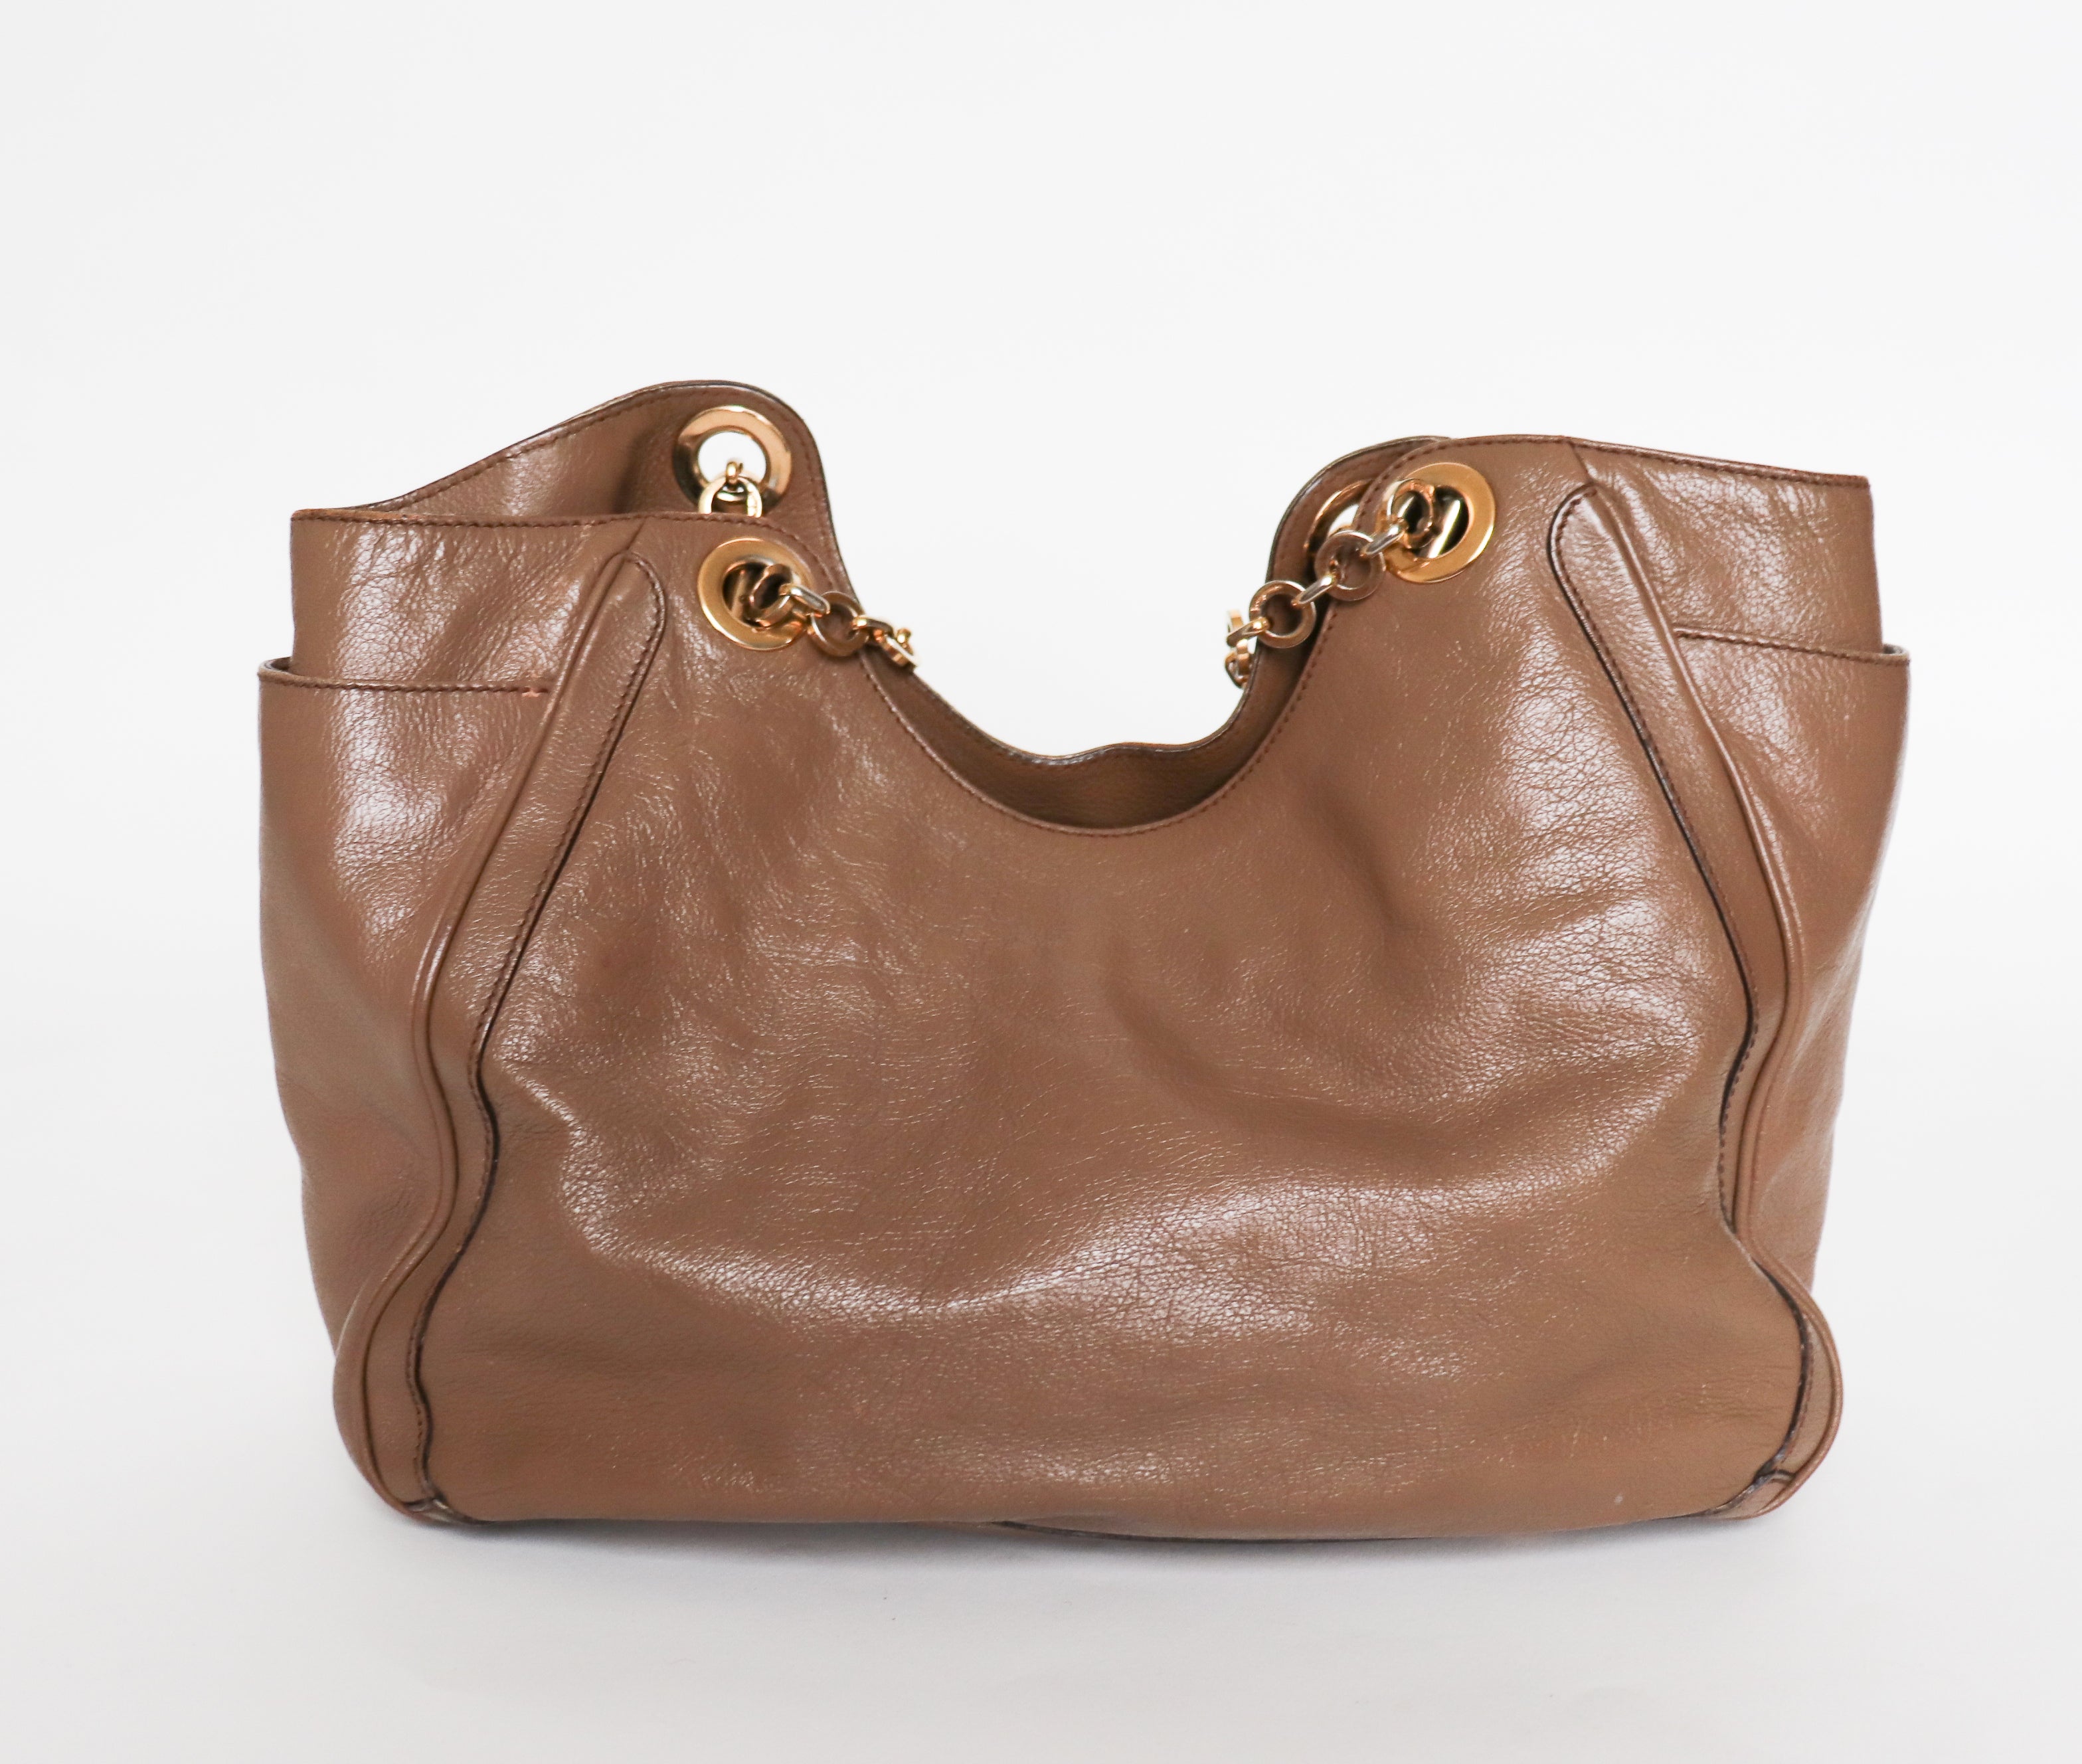 AUTHENTIC Salvatore Ferragamo Chain Tote Bag - Brown Leather -  Large